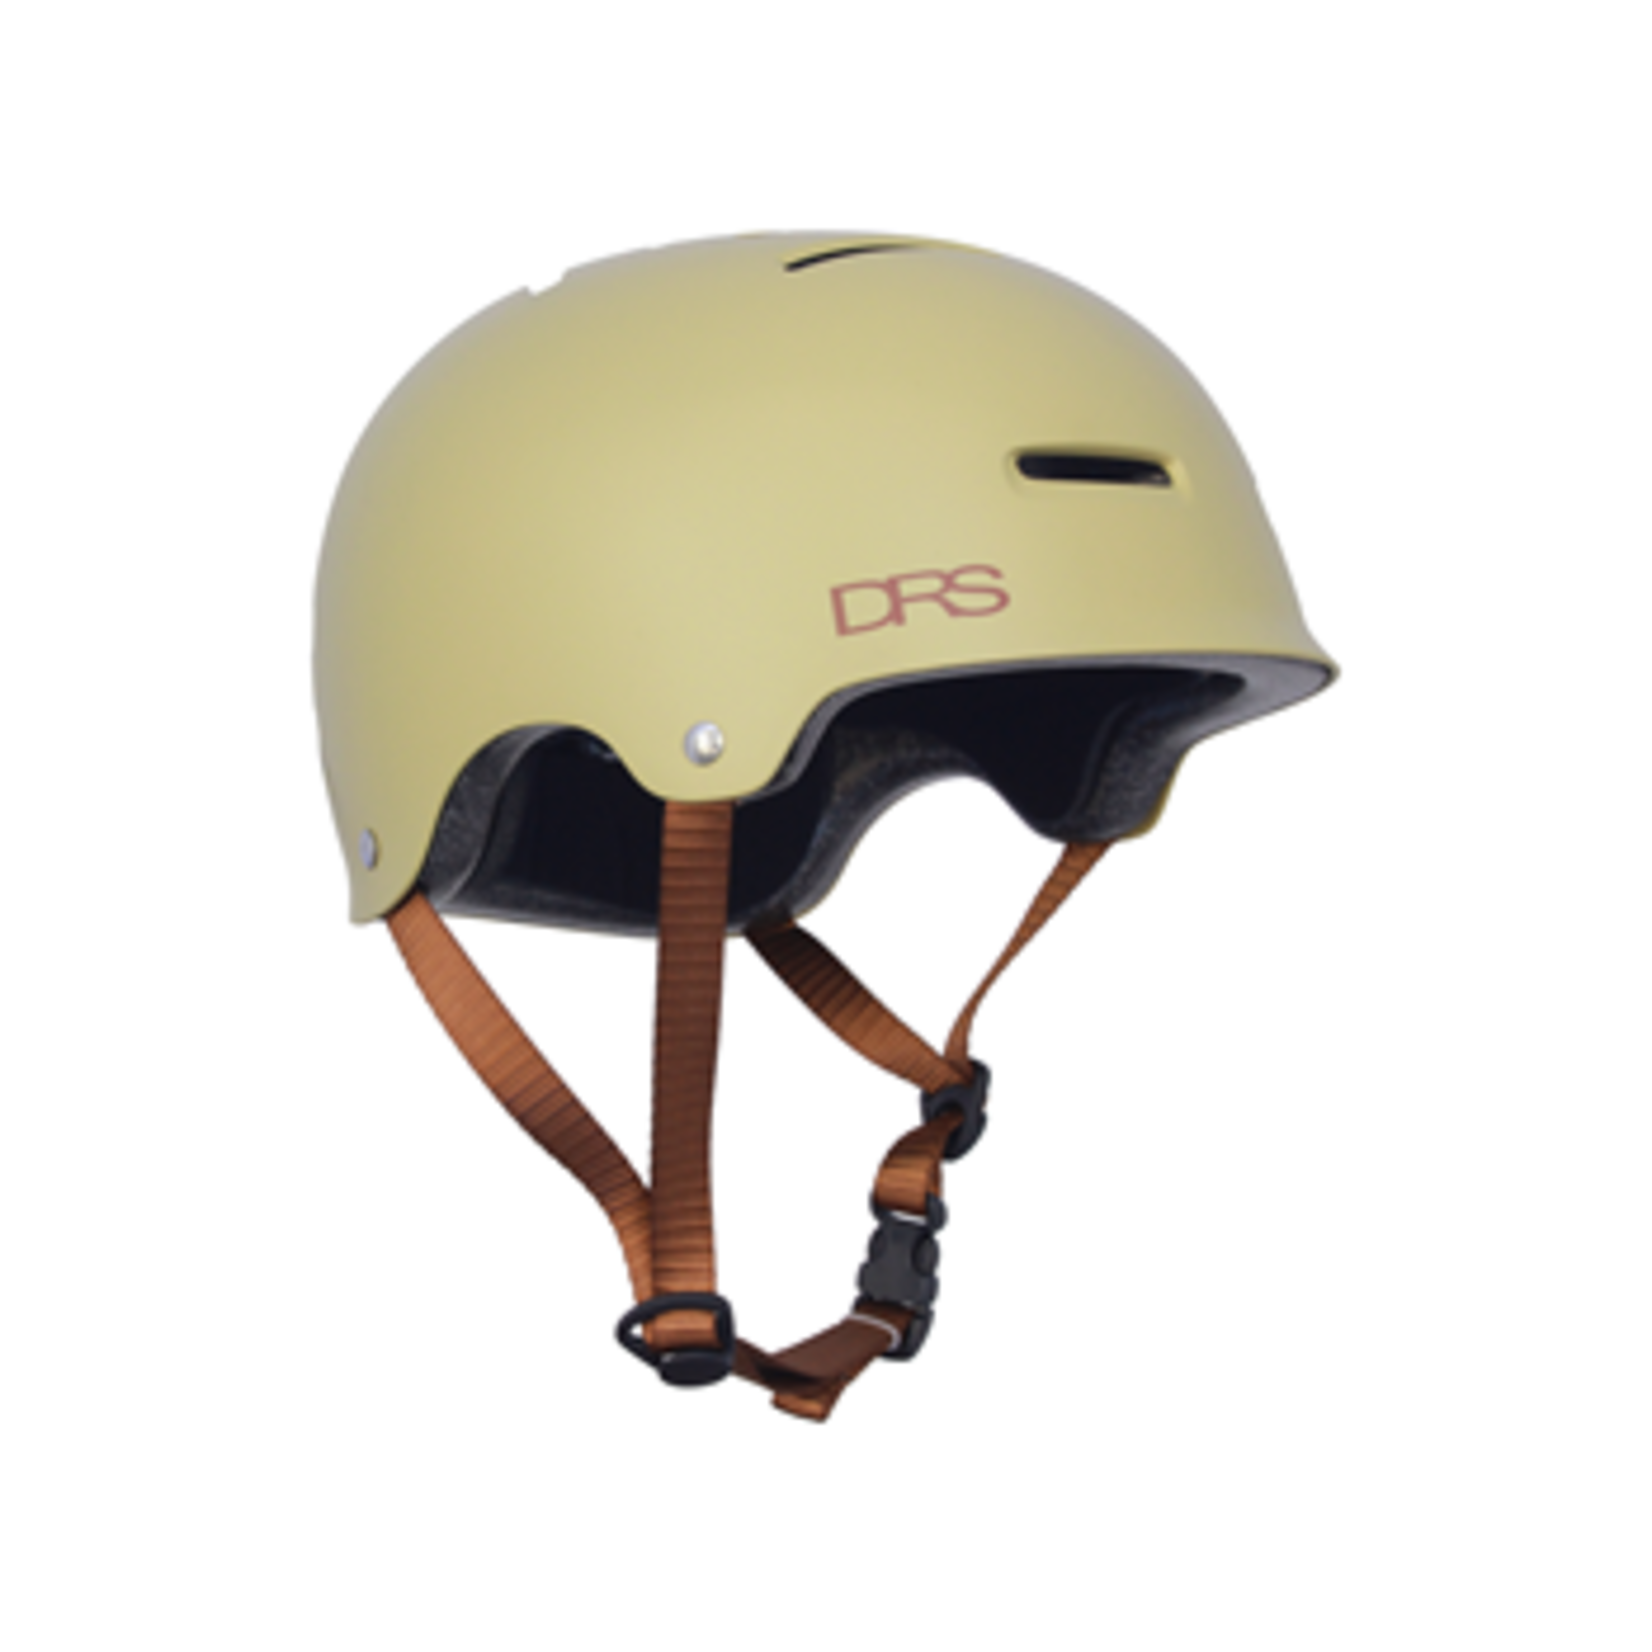 DRS DRS BMX/Skate Helmet